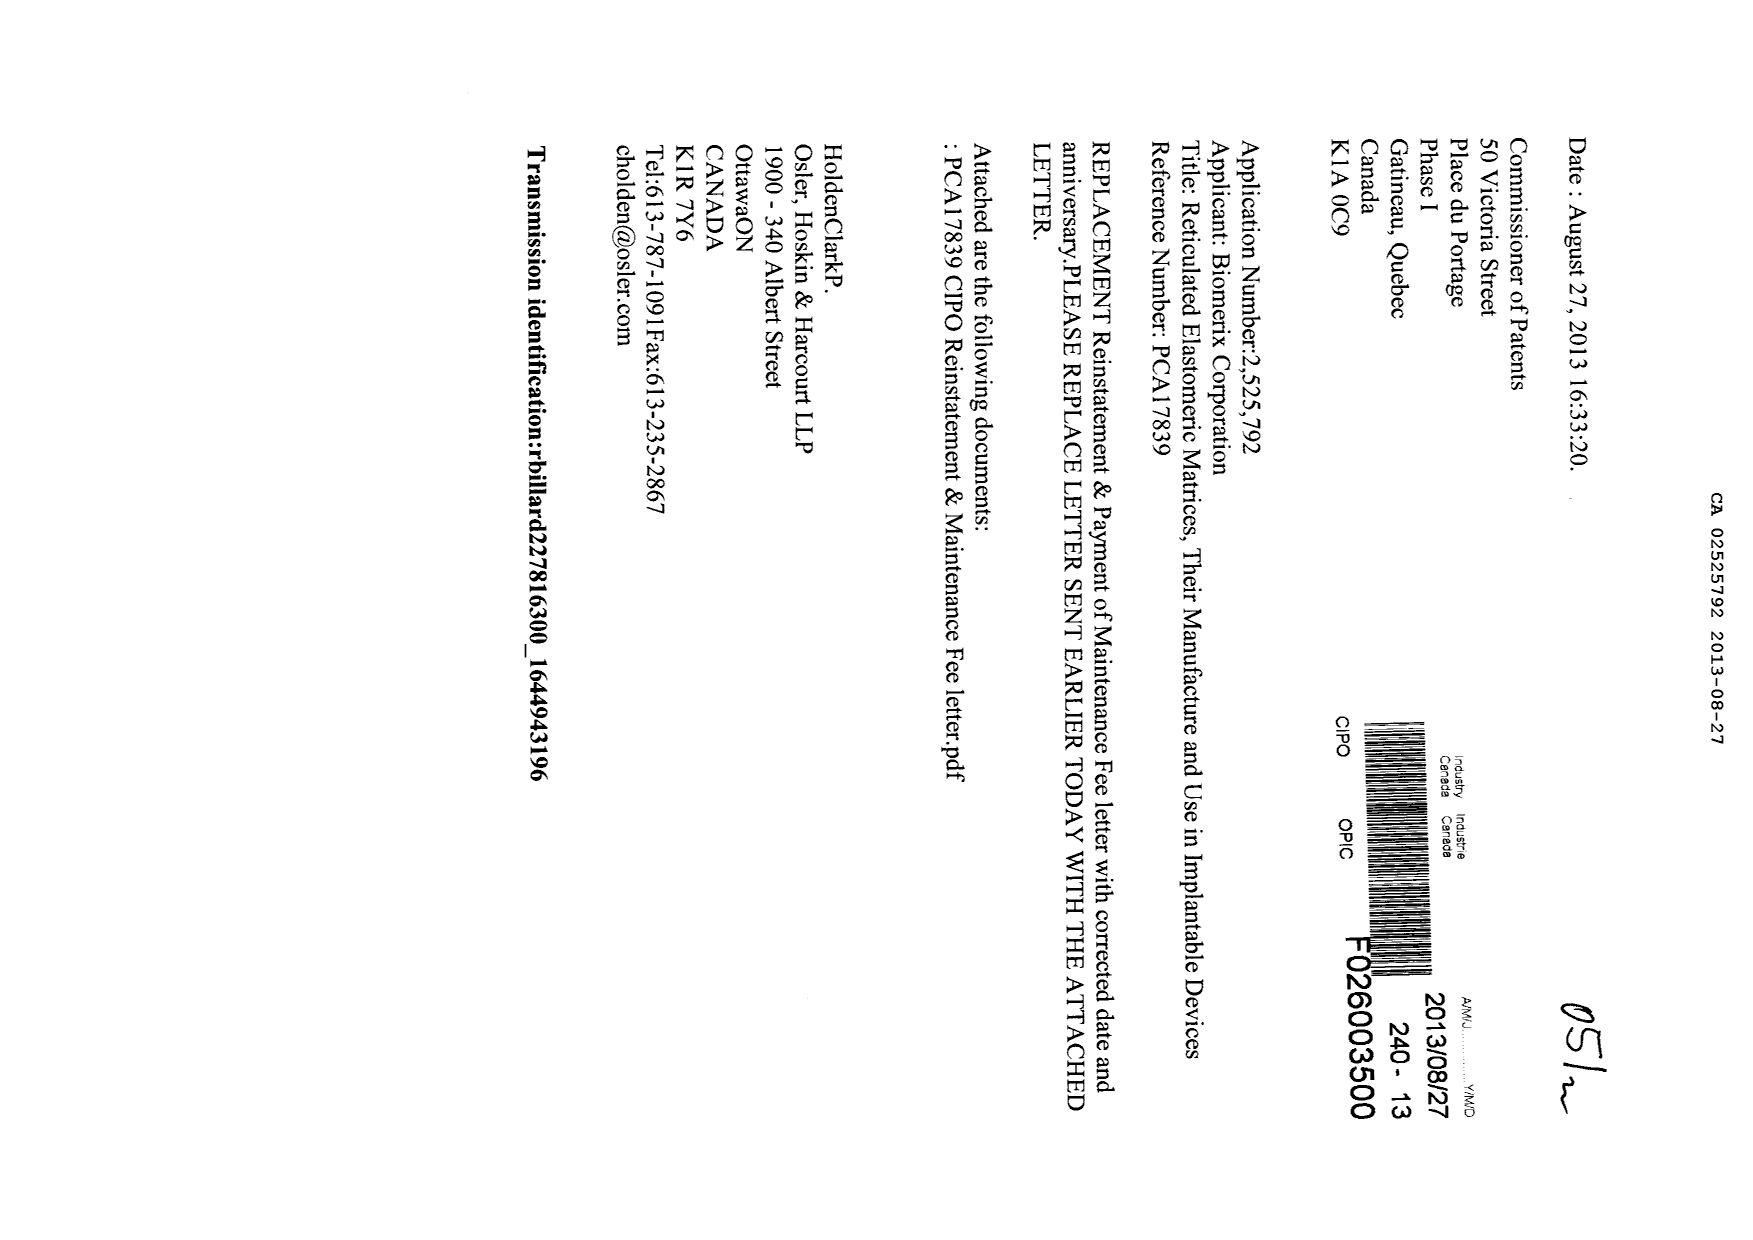 Canadian Patent Document 2525792. Correspondence 20121227. Image 1 of 2